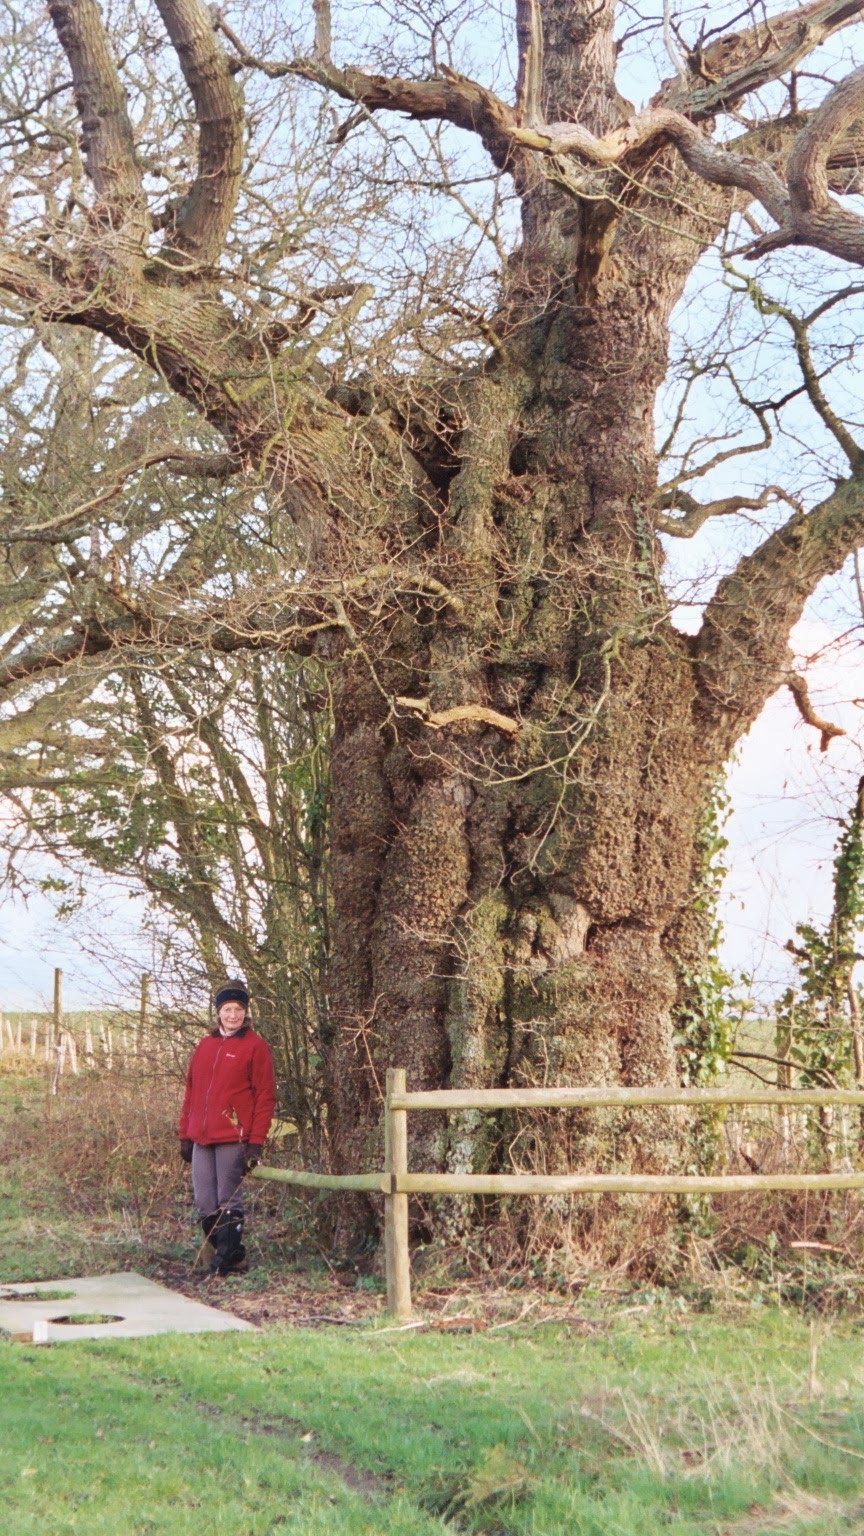 The venerable oak